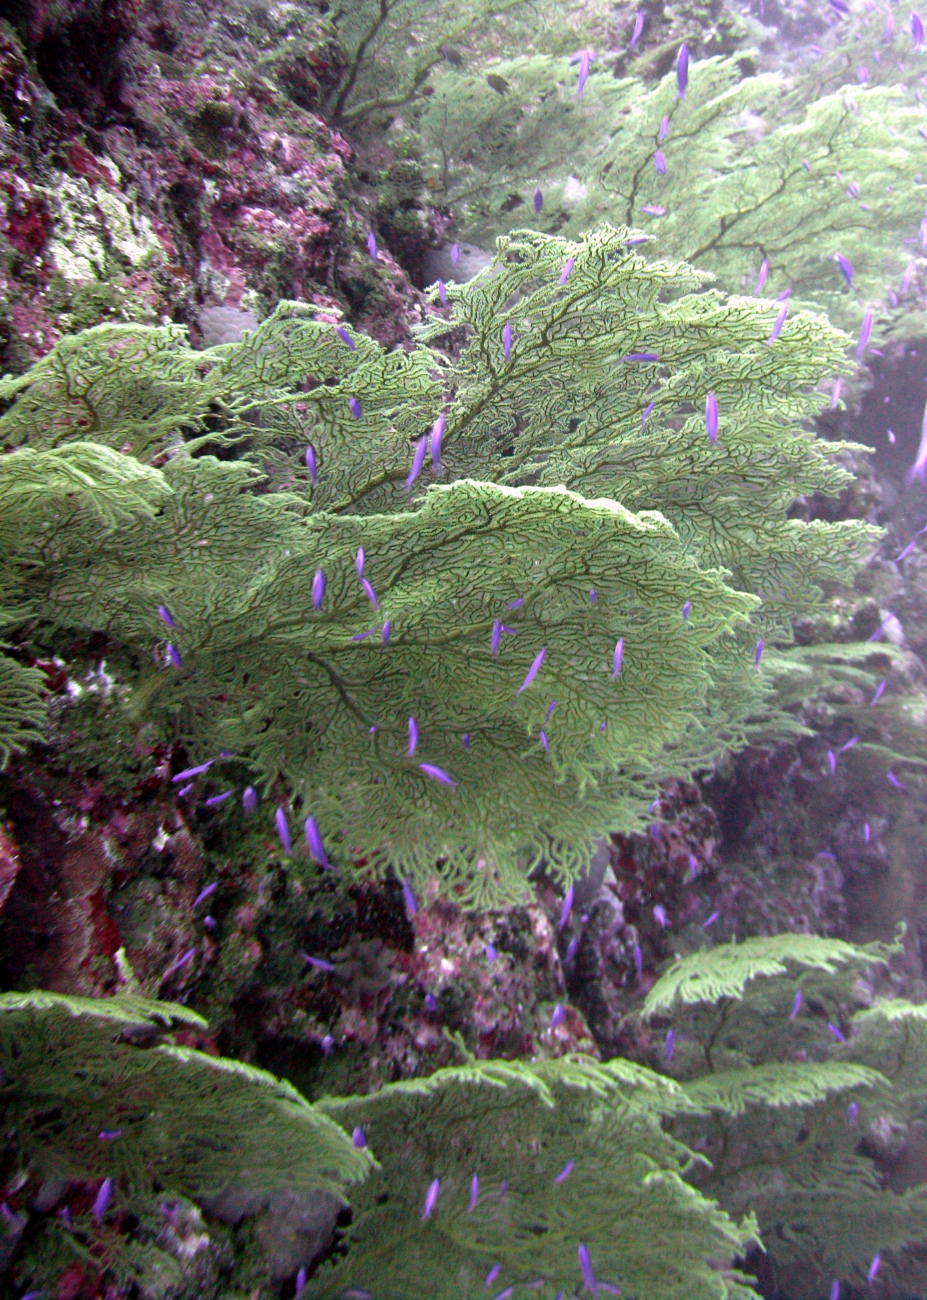 Green gorgonian corals with purple anthias